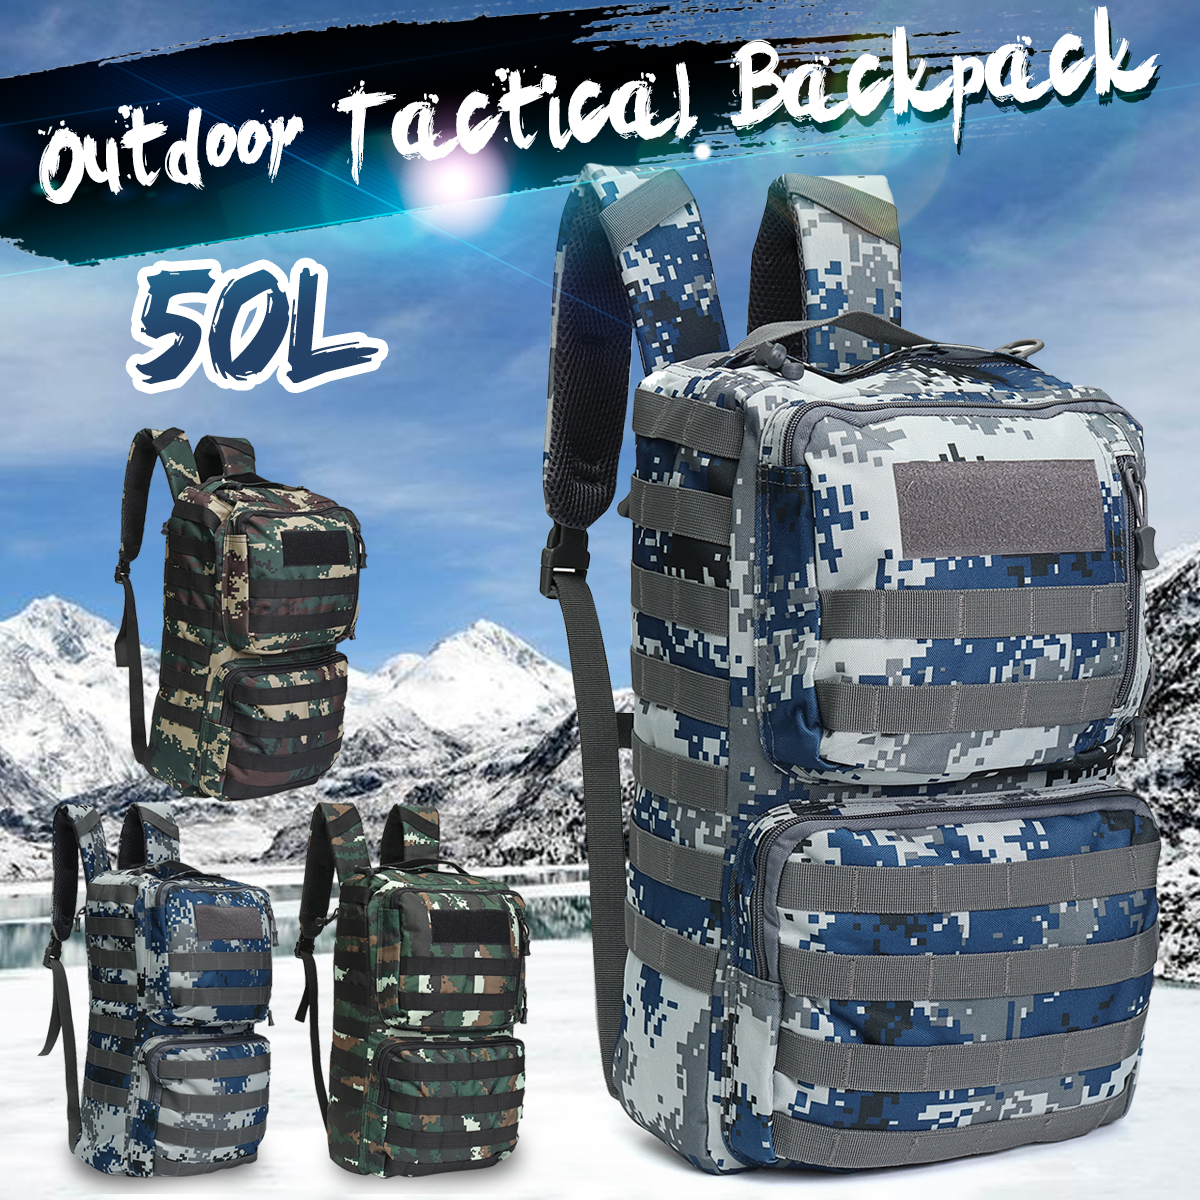 50L-Outdoor-Tactical-Army-Backpack-Rucksack-Waterproof-Camping-Hiking-Travel-Bag-1337060-1